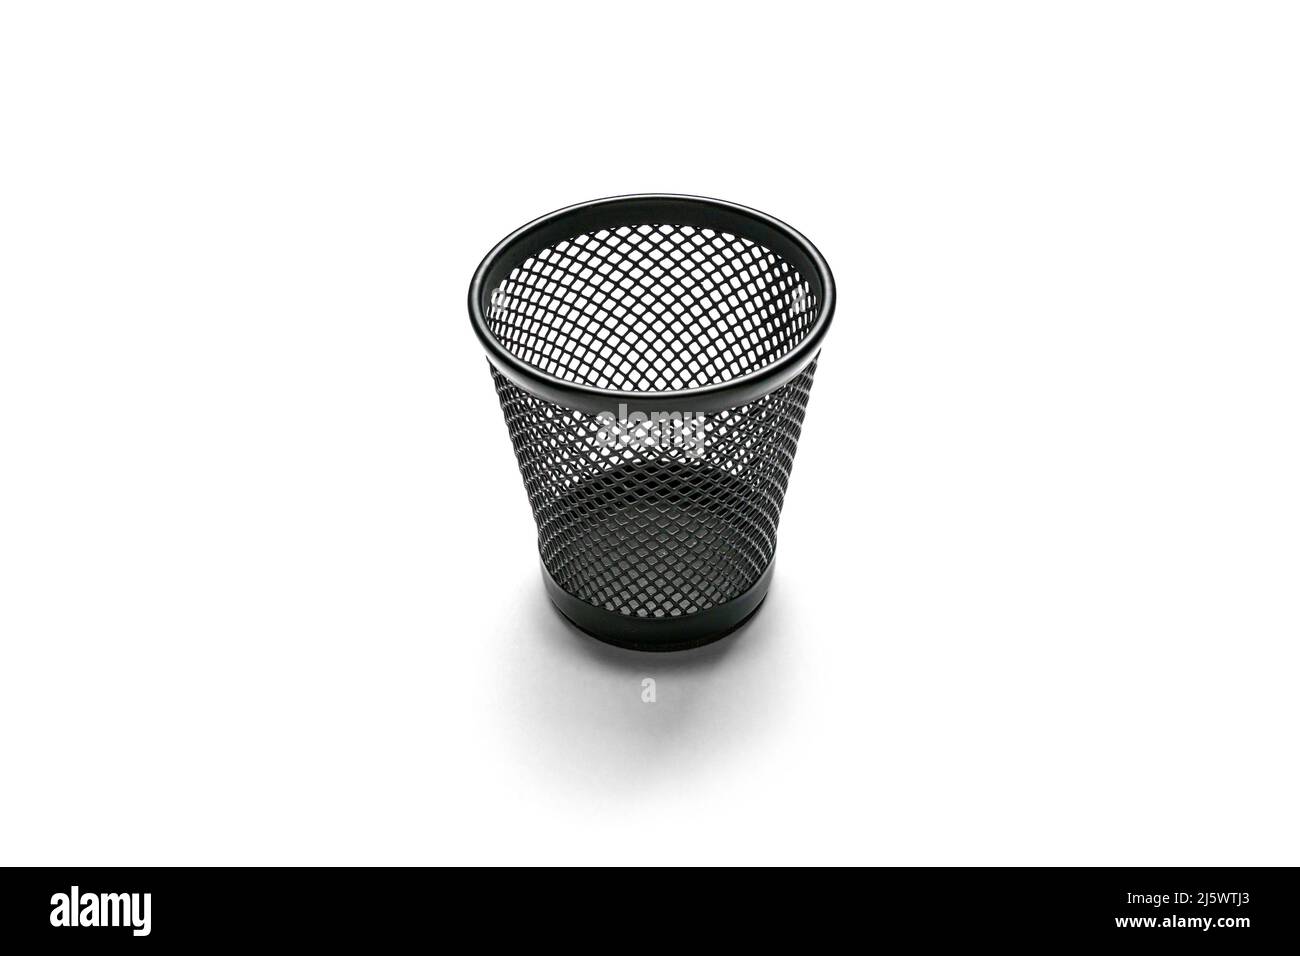 Black plastic basket, isolated on white background with reflection. Stock Photo